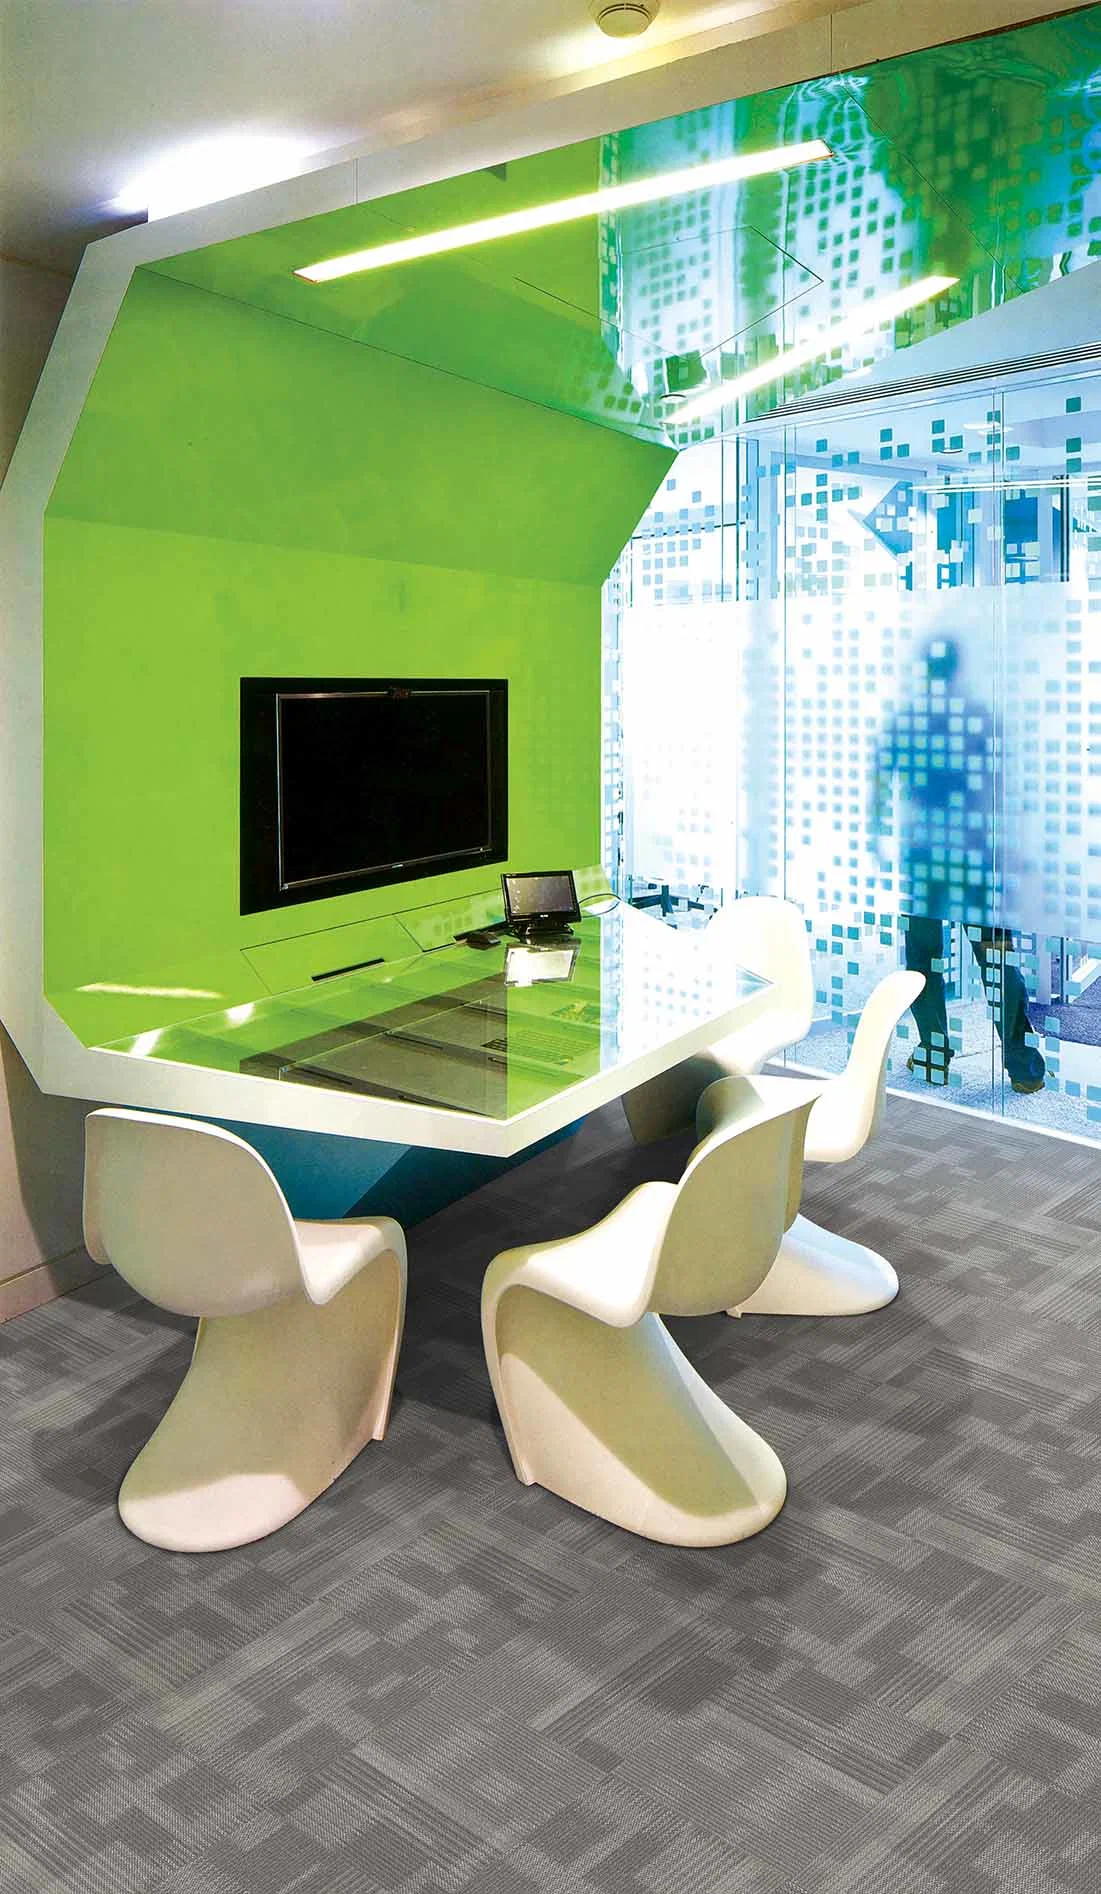 Nylon Carpet Tile with PVC Backing for Commercial/Hotel/Model 22301